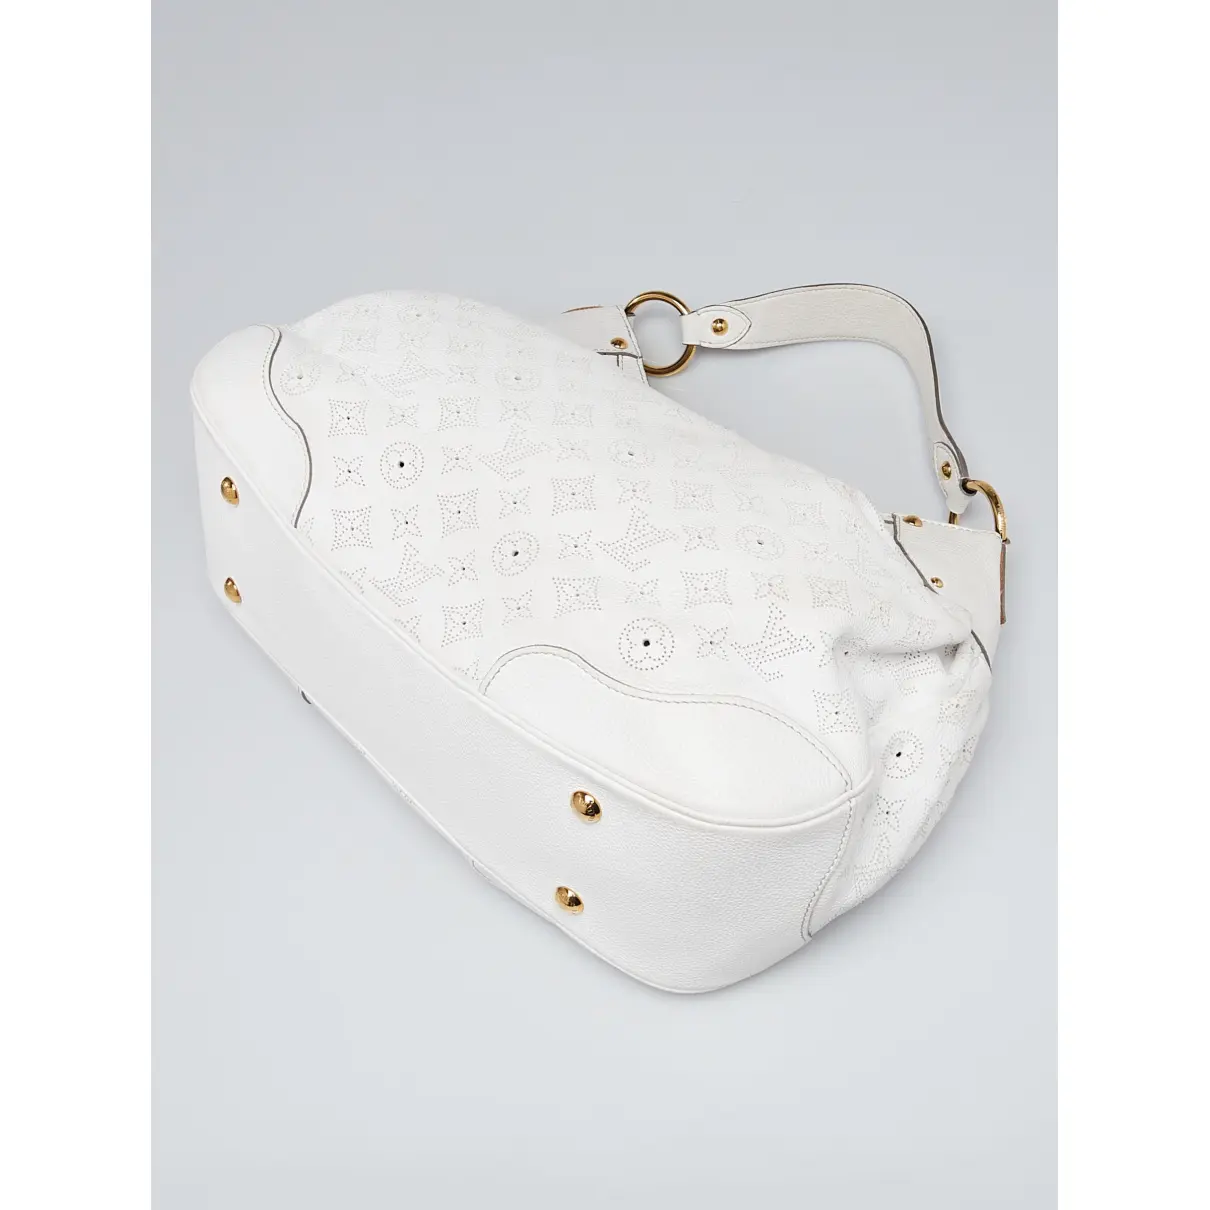 Buy Louis Vuitton Mahina leather bag online